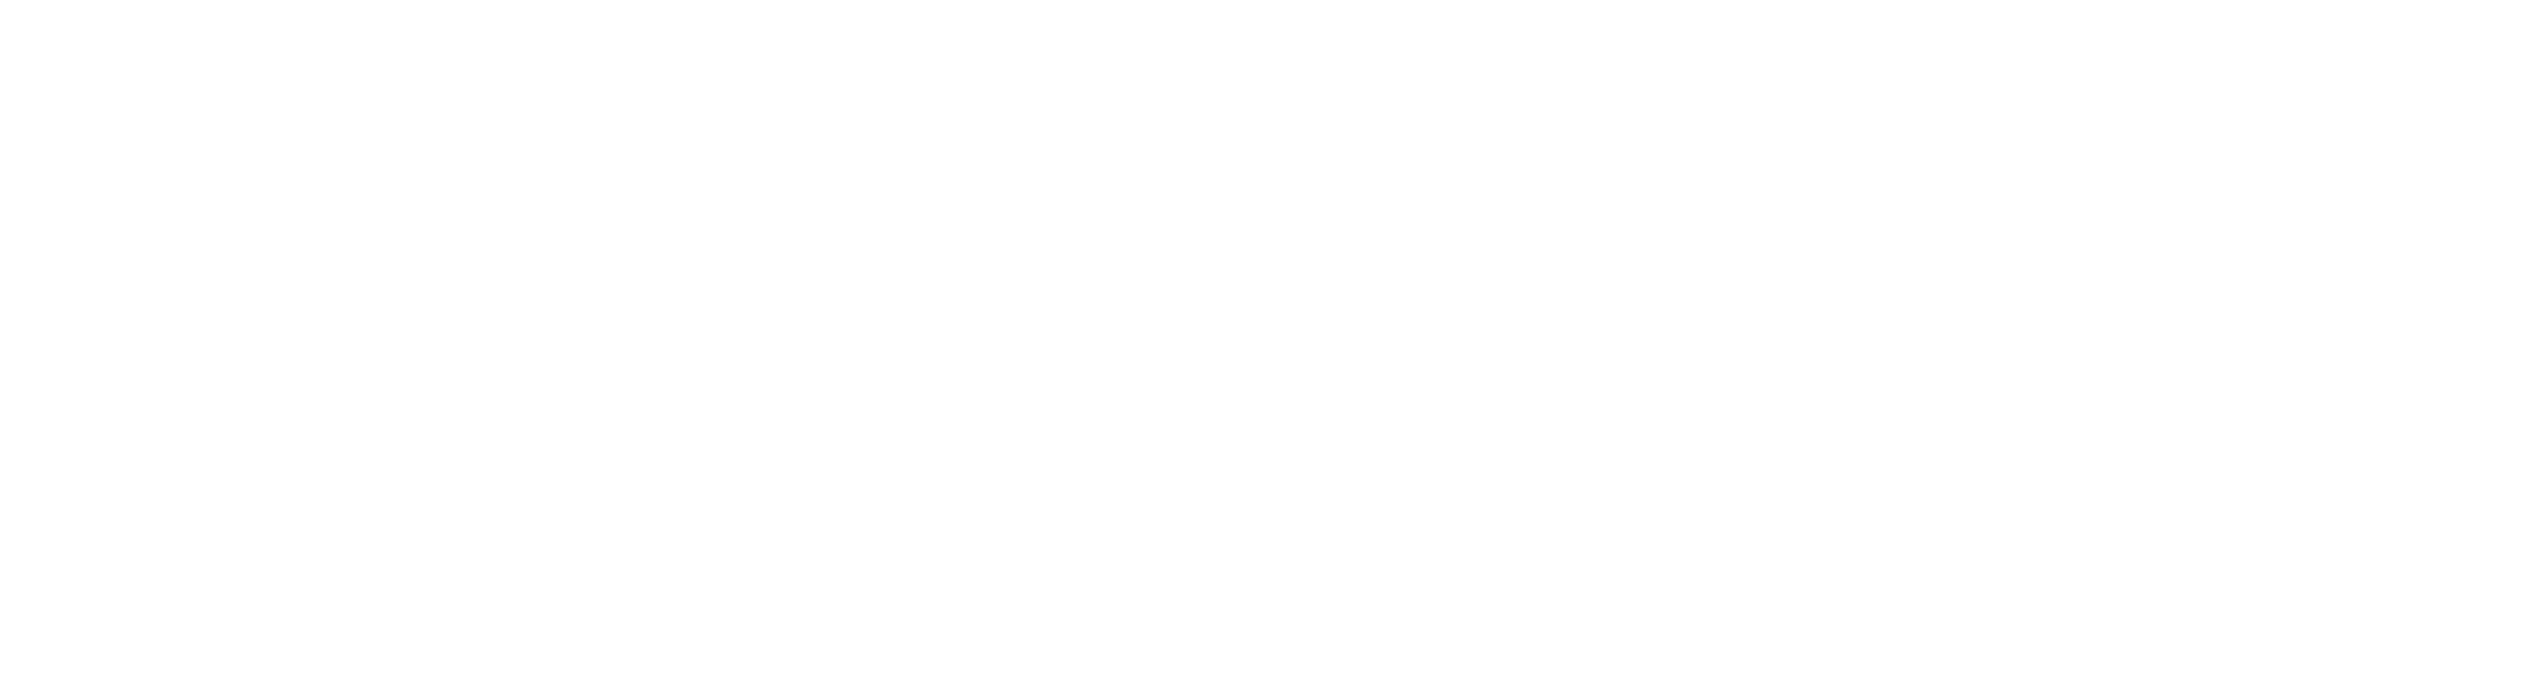 Veste-Verlag Roßteutscher